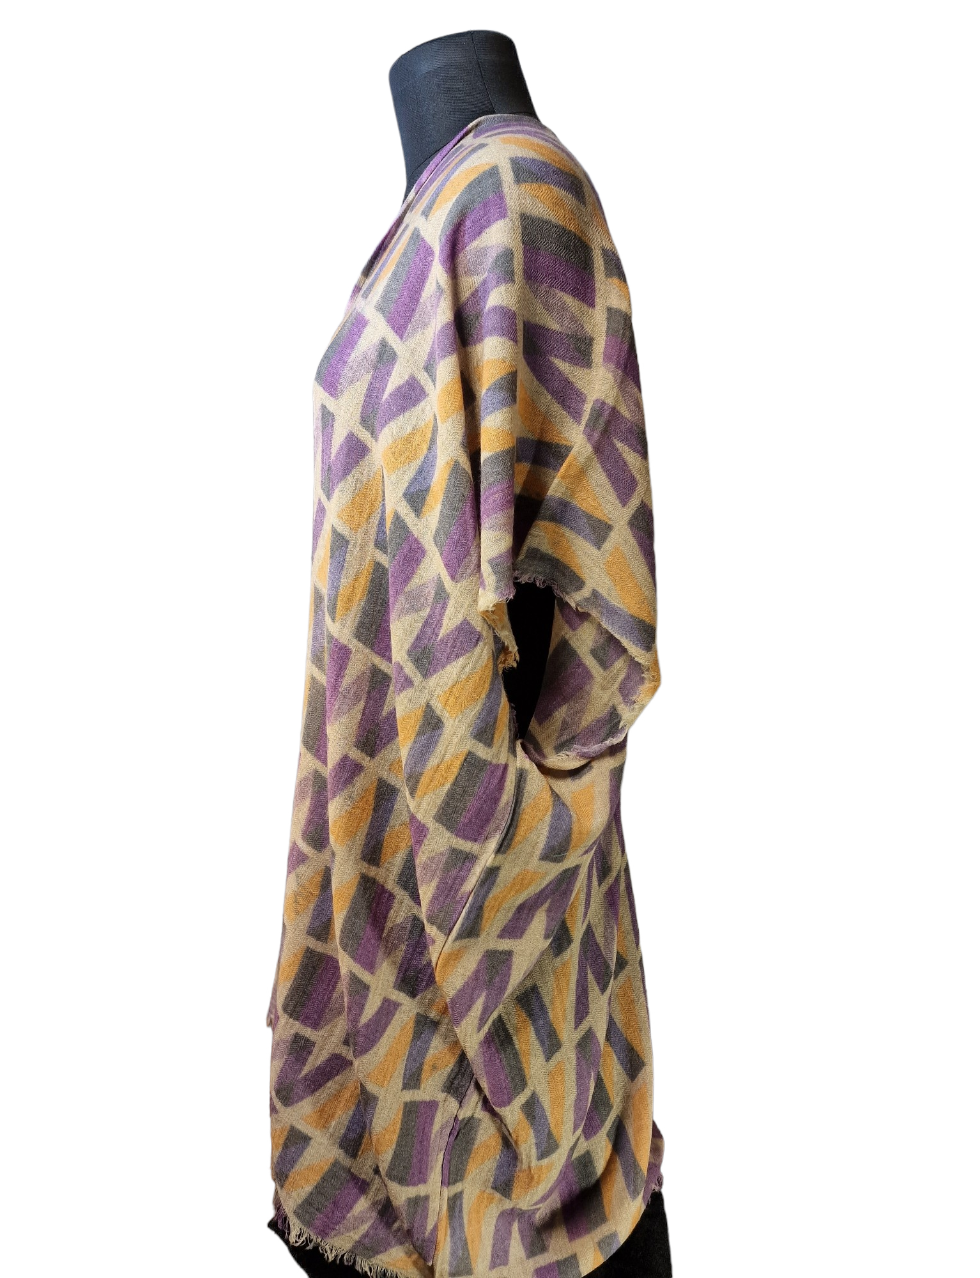 Stilig sjal-jakke i gult og lilla (7)